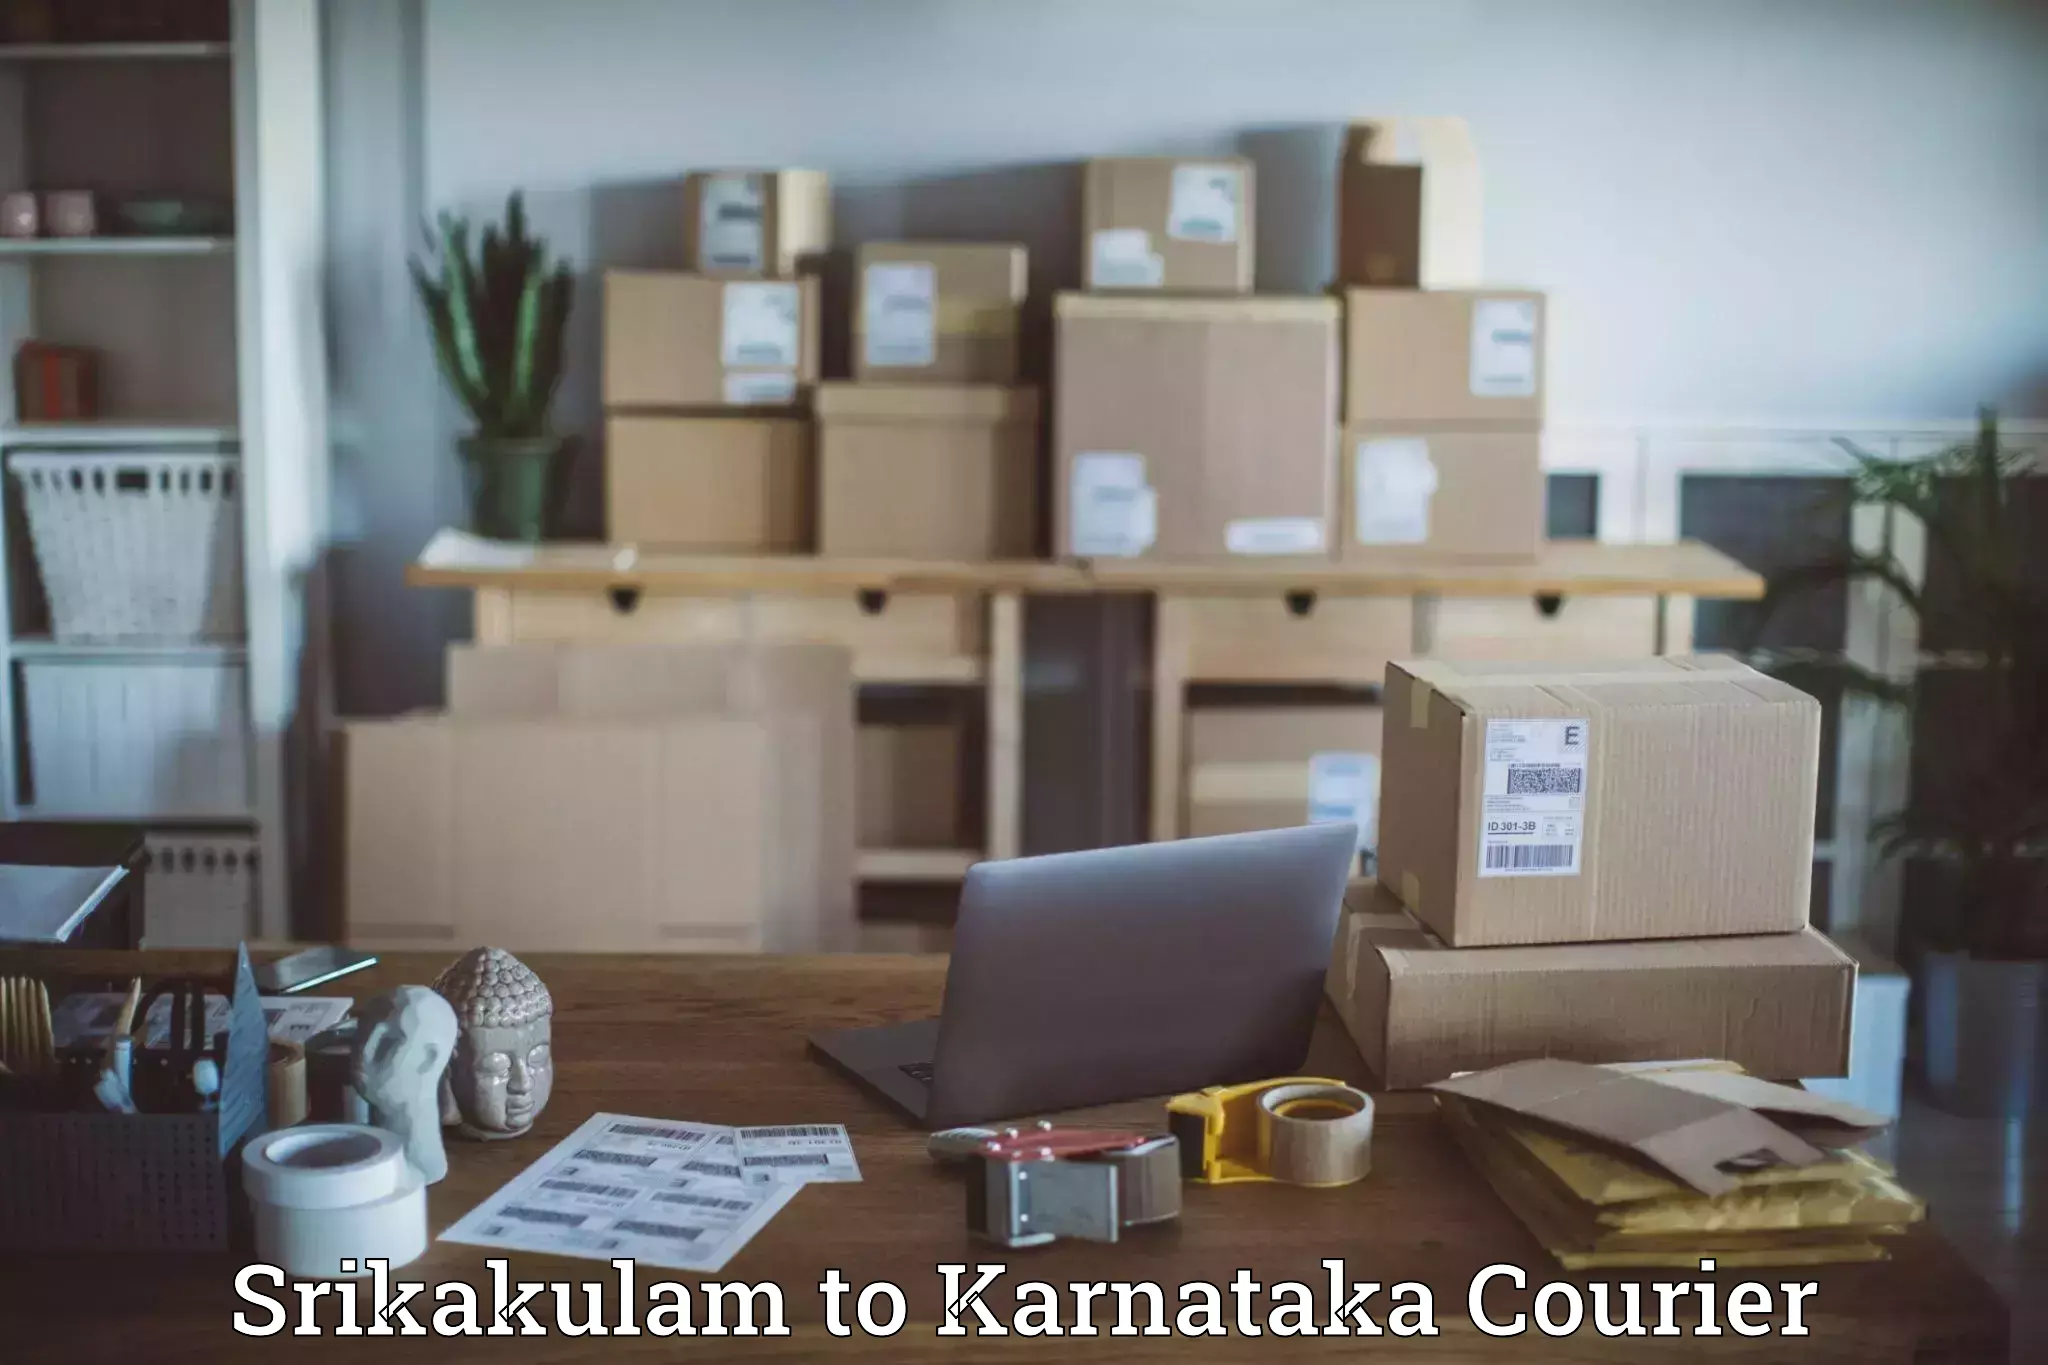 Courier service efficiency Srikakulam to Huliyar